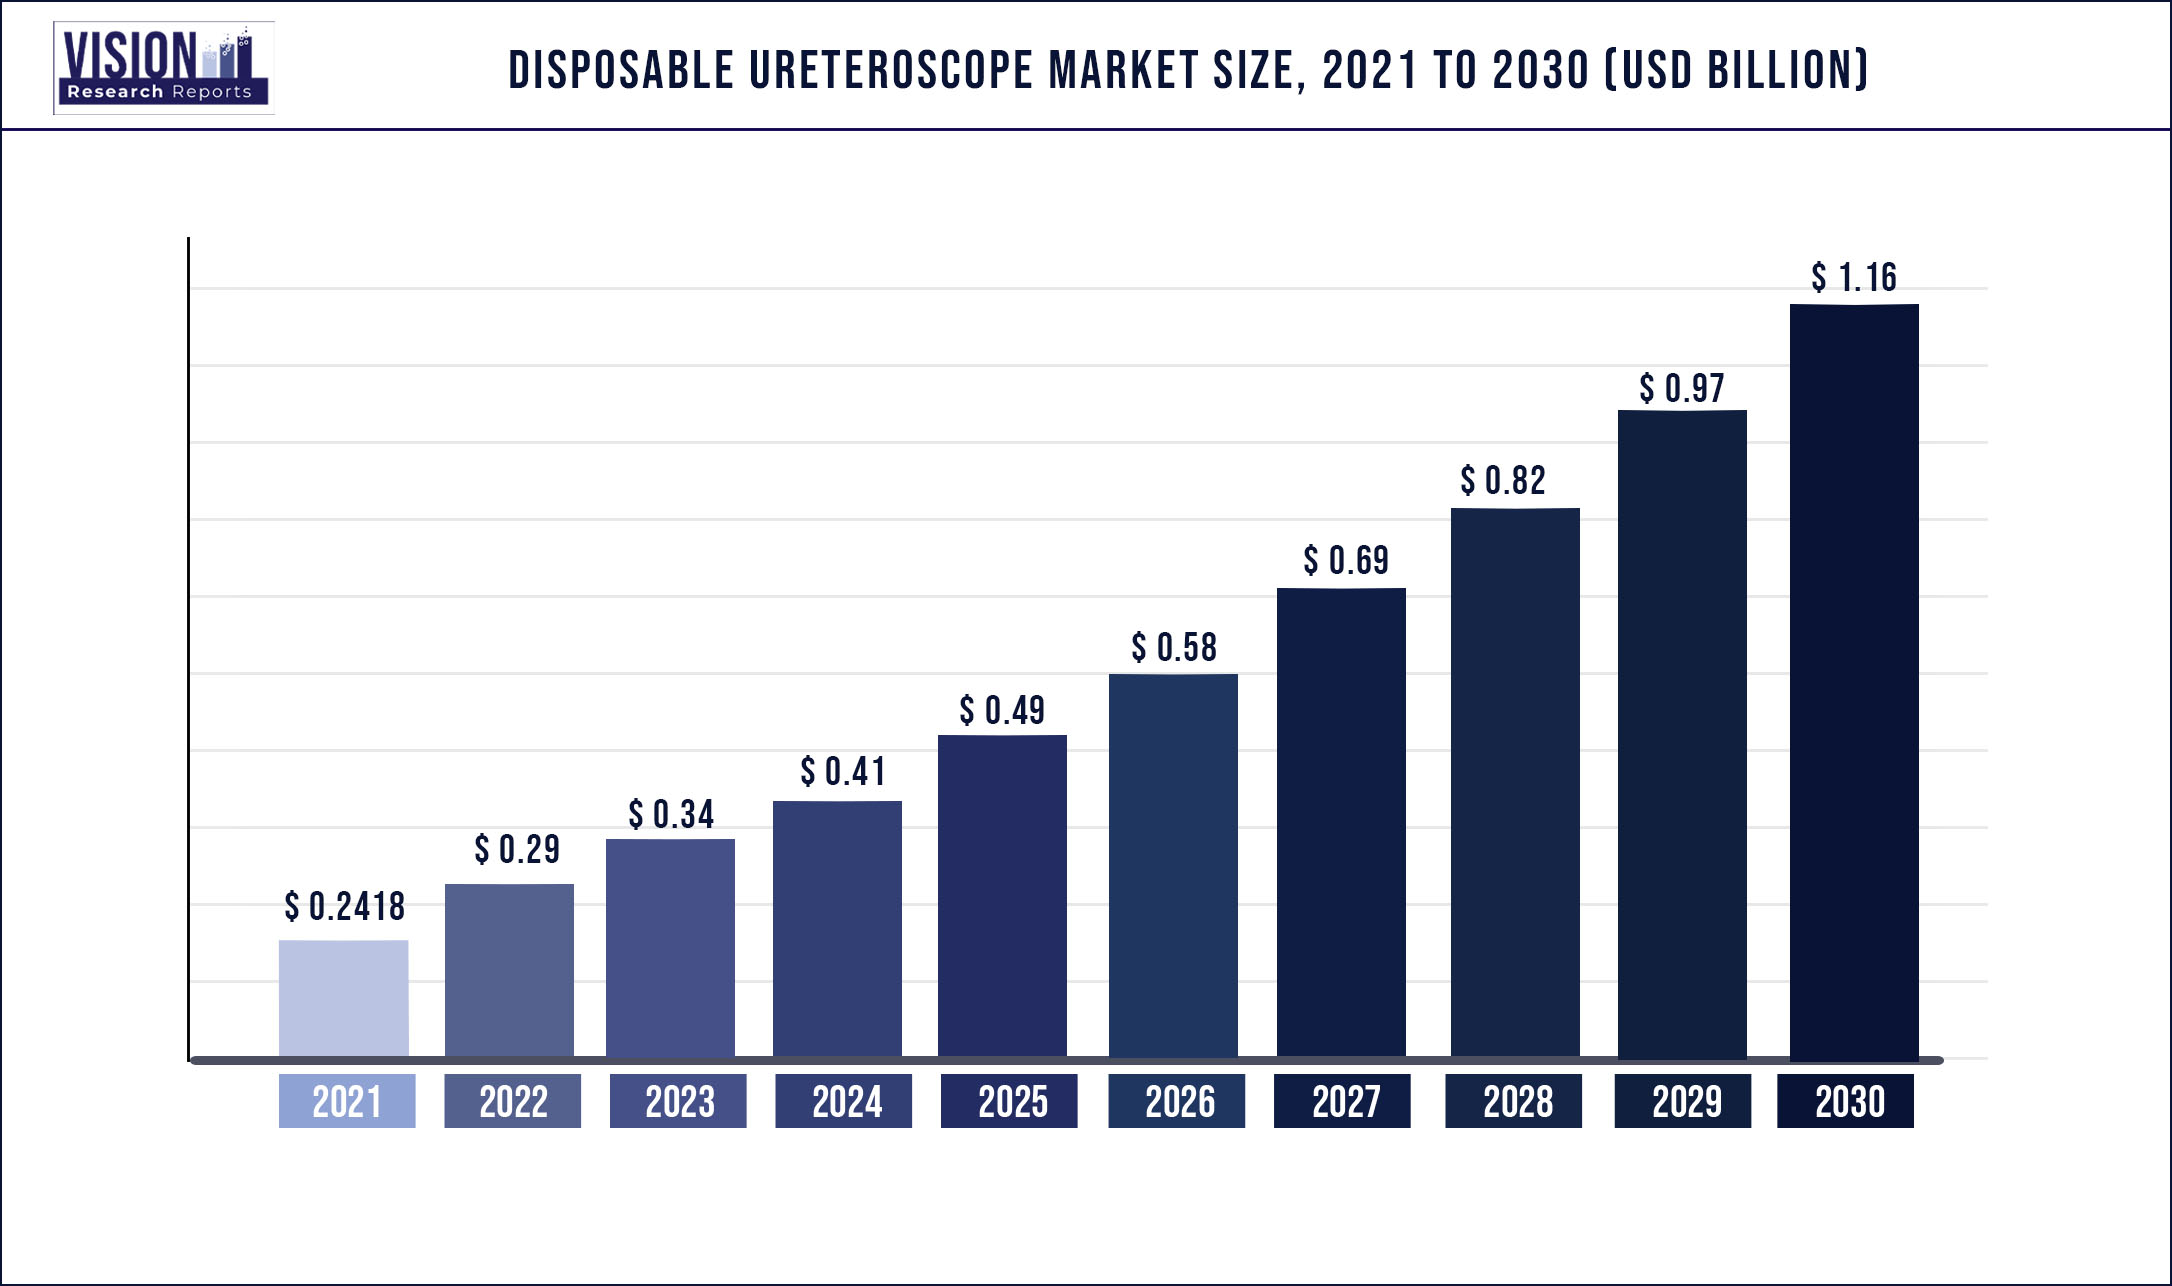 Disposable Ureteroscope Market Size 2021 to 2030